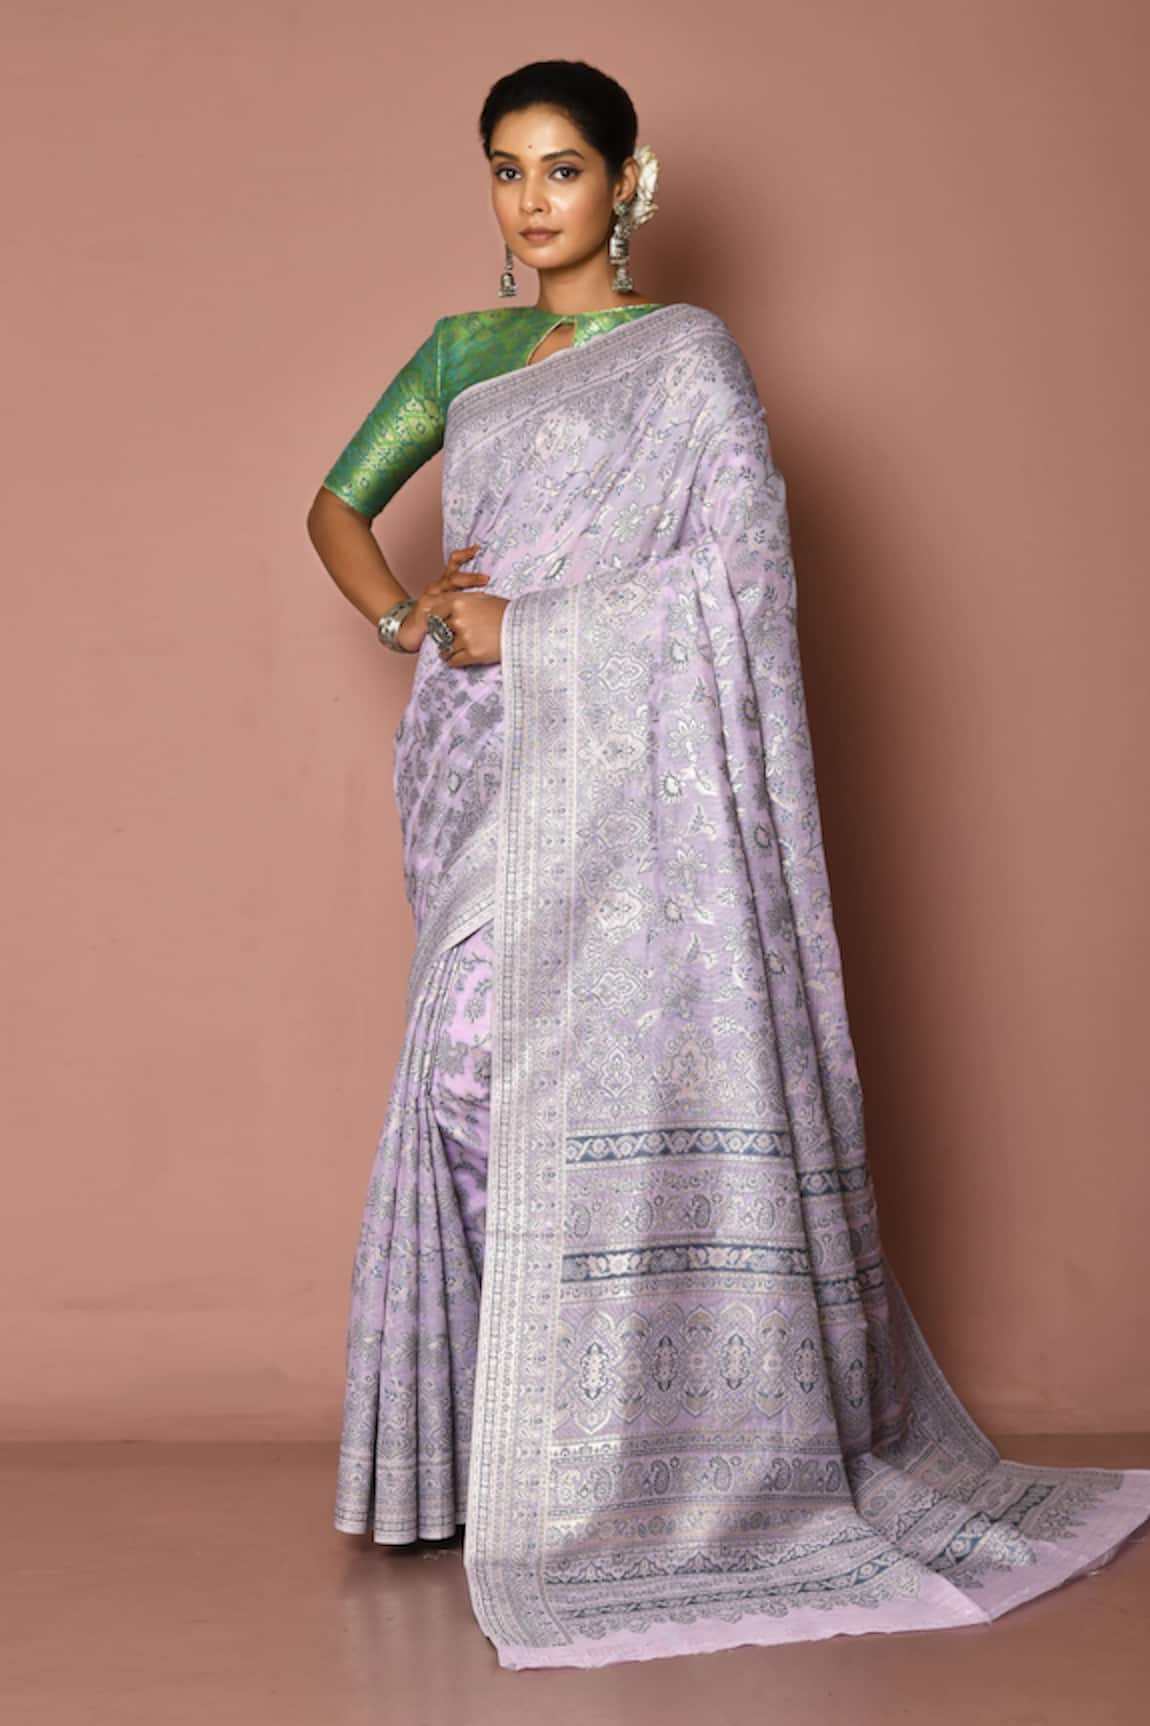 Samyukta Singhania Bloom & Paisley Pattern Saree